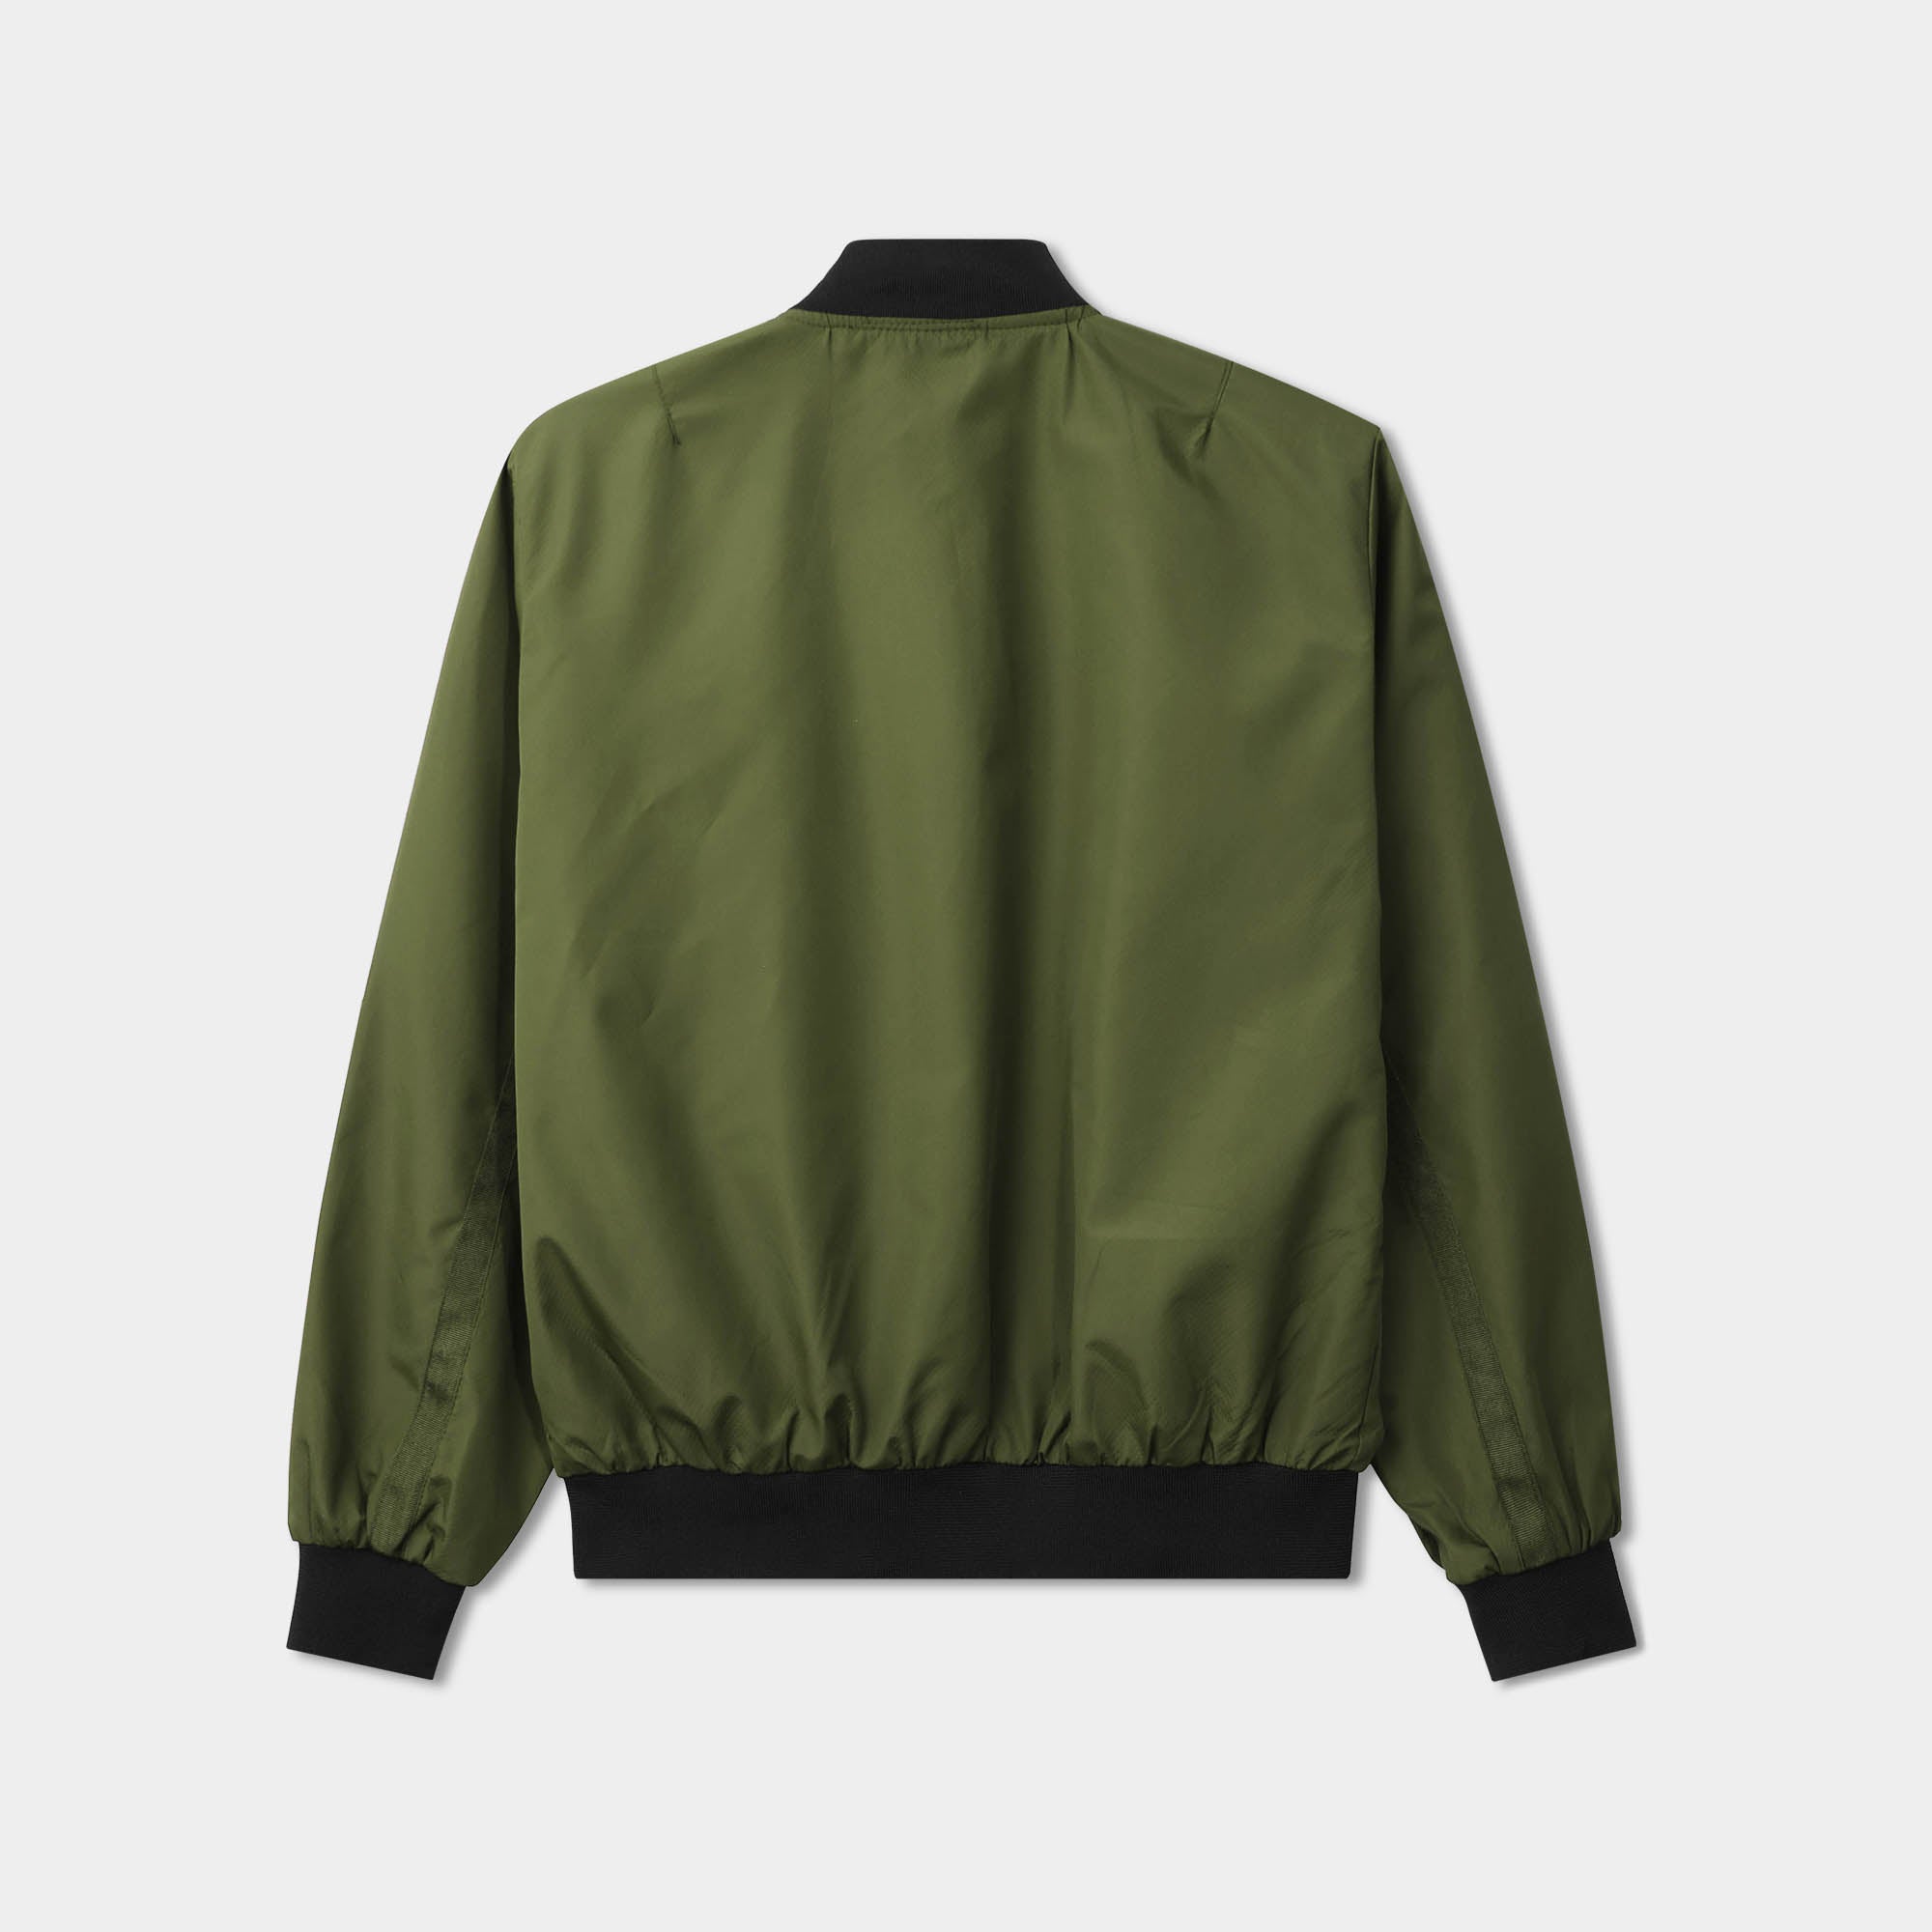 bomber jacket_mens bomber jacket_aviators jacket_aviator jacket mens_oversized bomber jacket_best bomber jackets_Olive